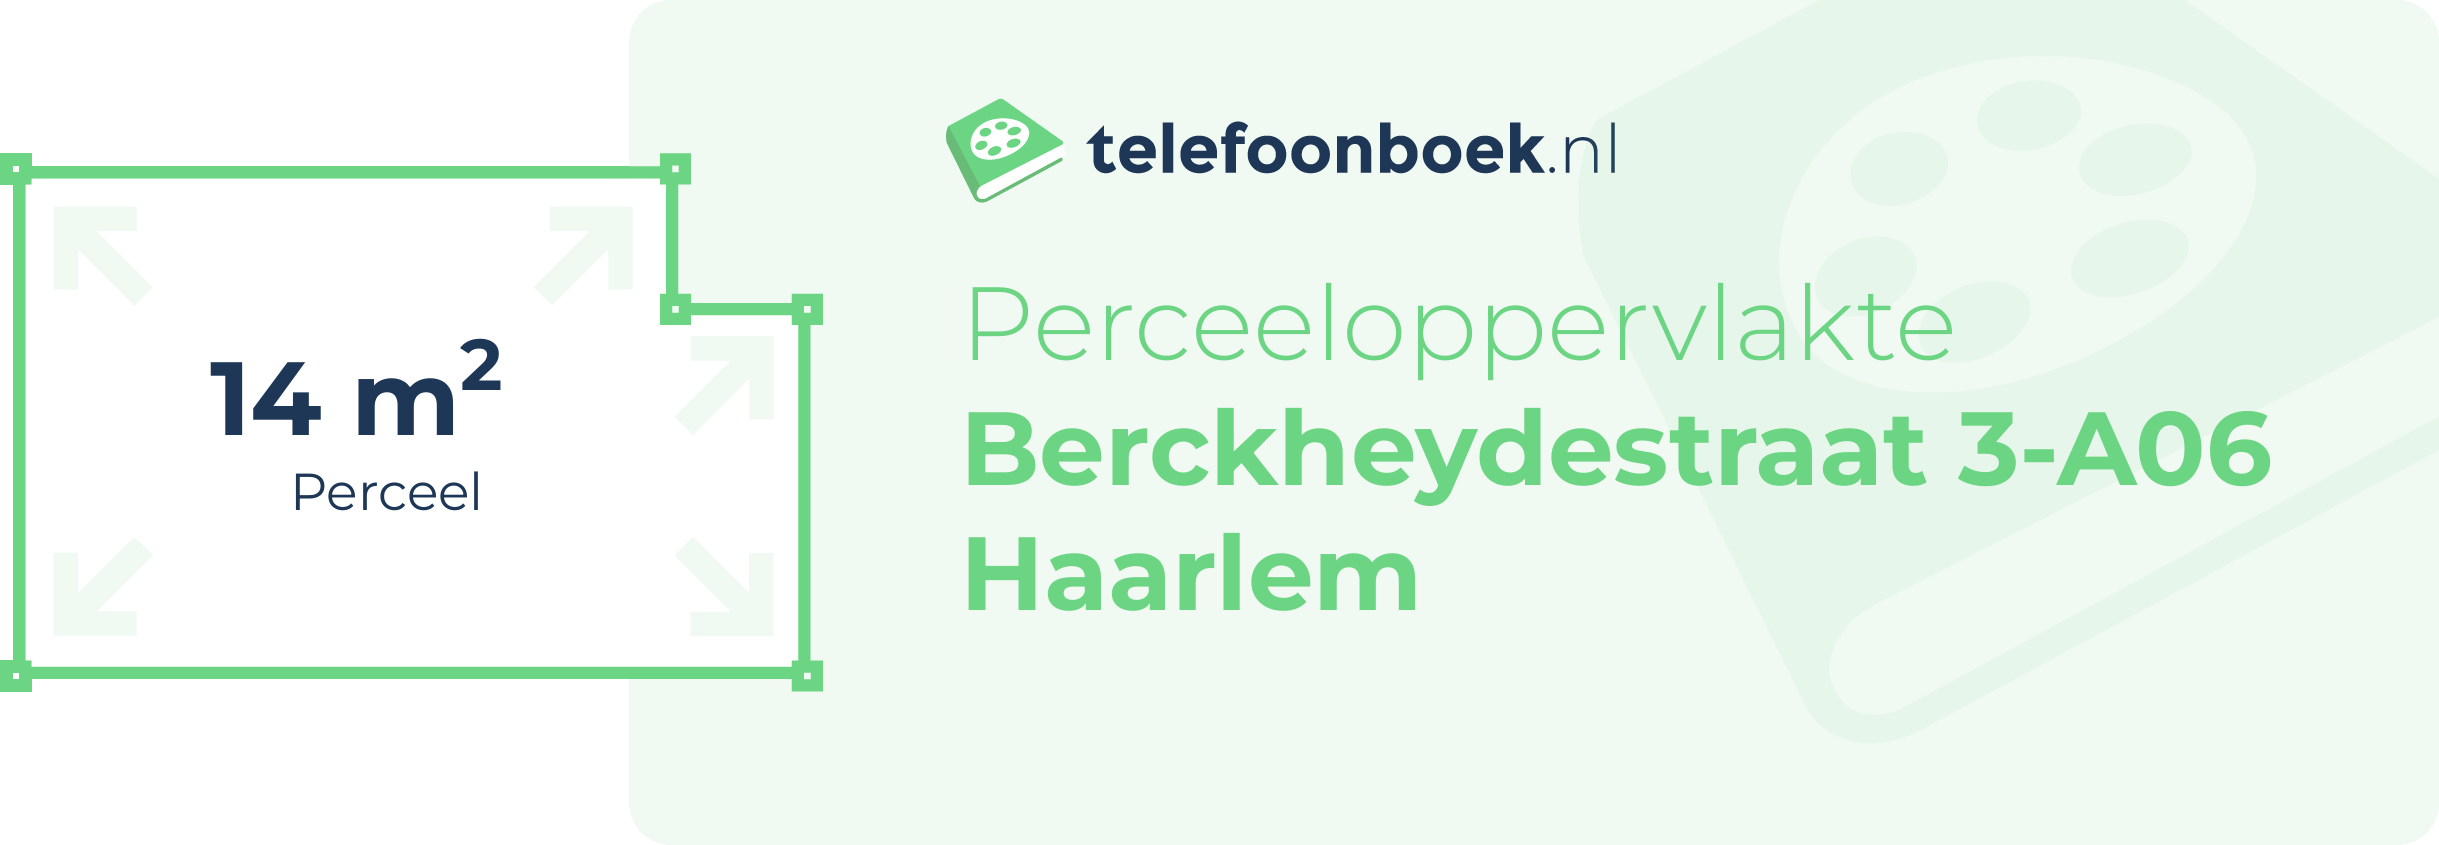 Perceeloppervlakte Berckheydestraat 3-A06 Haarlem